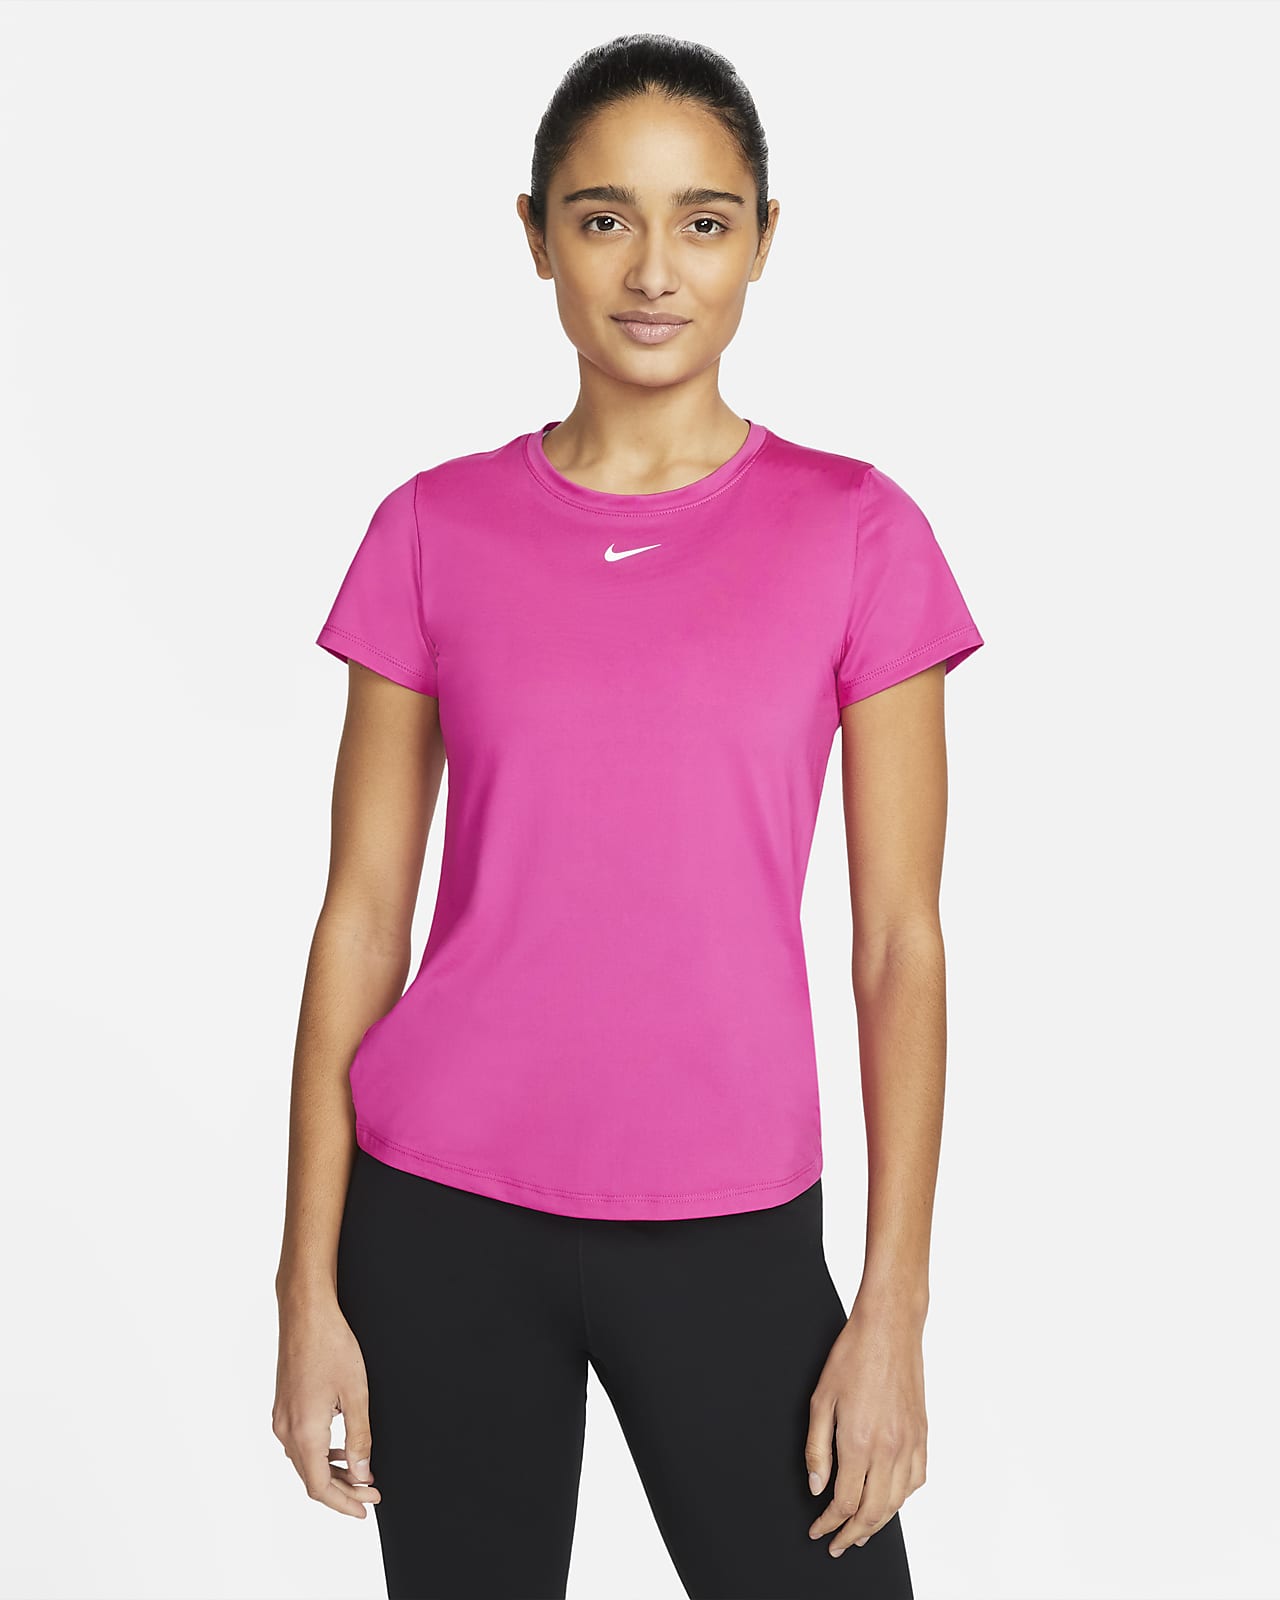 Nike Dri-FIT One karcsúsított fazonú, rövid ujjú női póló